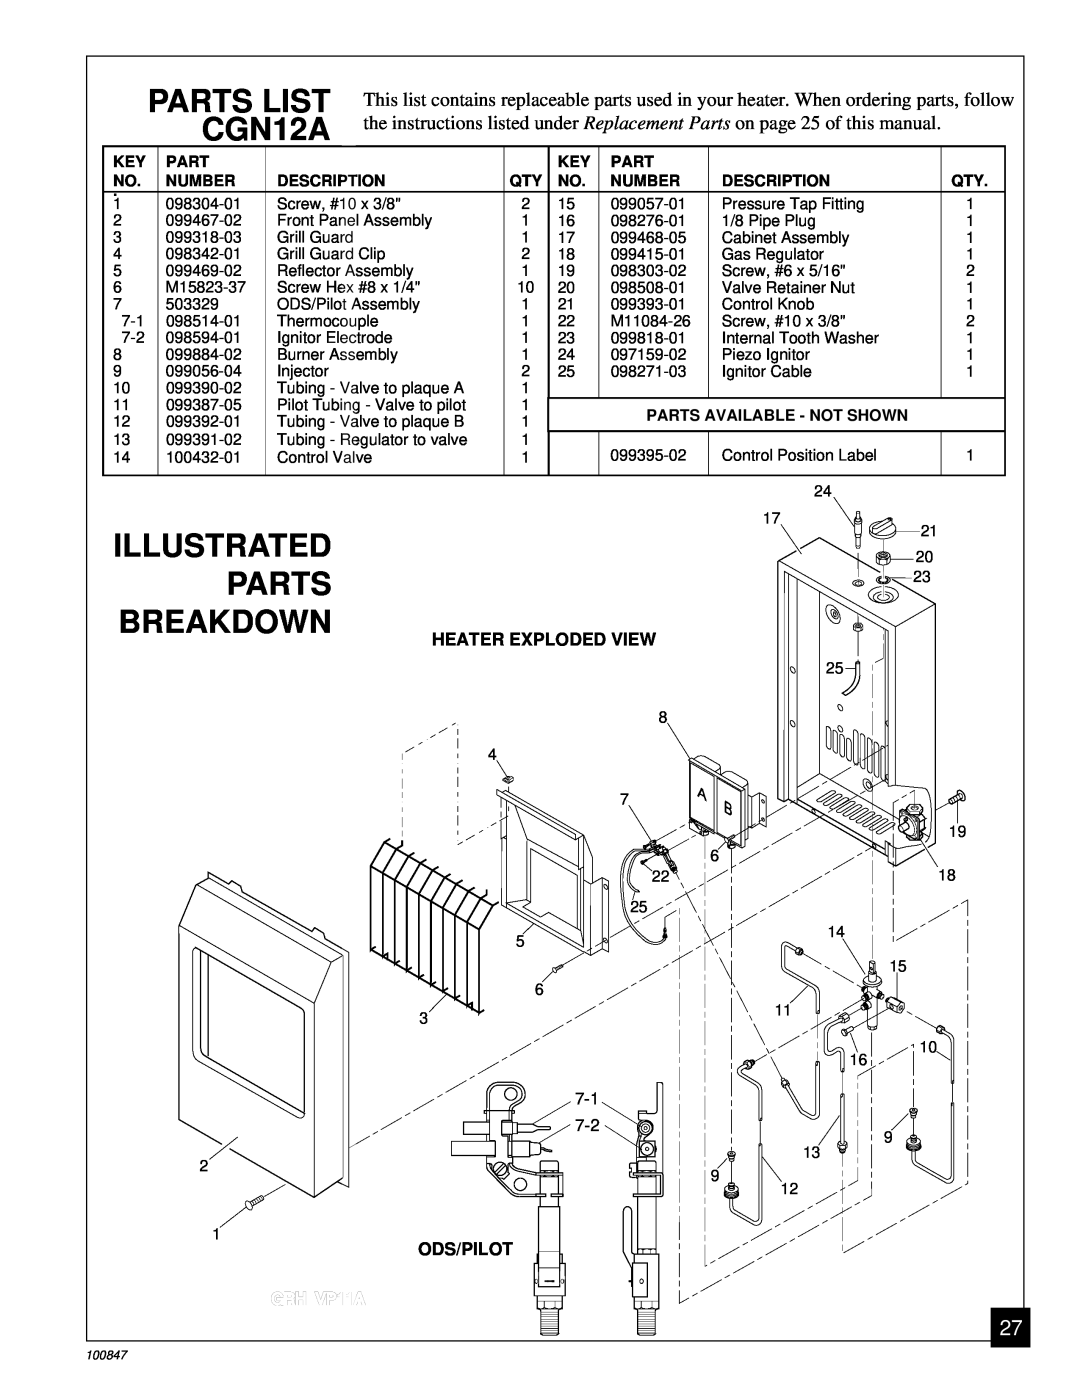 Desa Illustrated Parts Breakdown, PARTS LIST CGN12A, Number, Description, Parts Available - Not Shown 